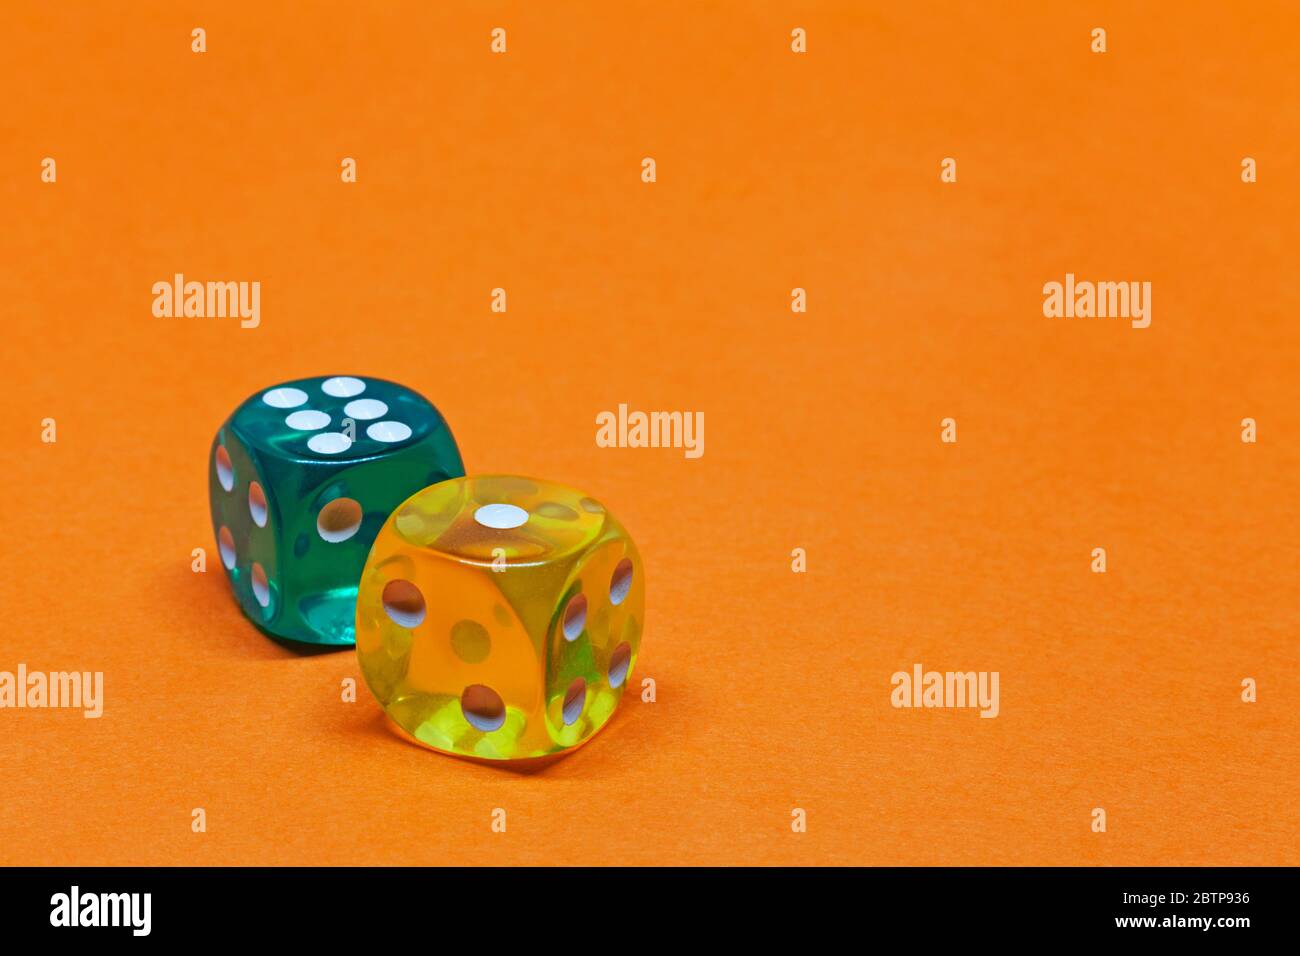 two transparent dice on orange background Stock Photo